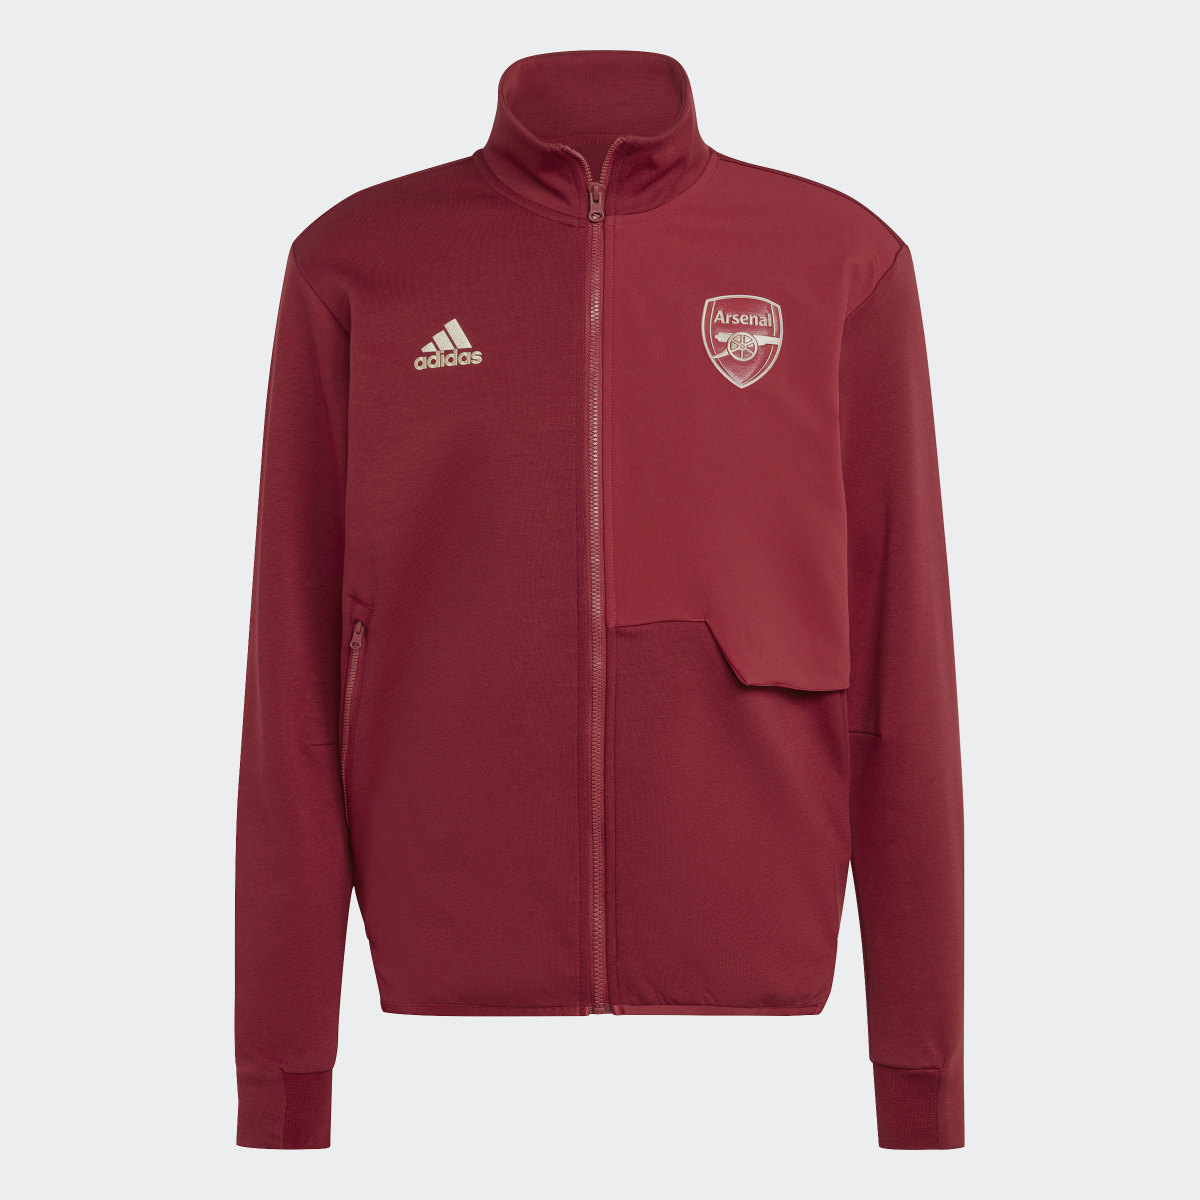 Adidas Arsenal Anthem Jacket. 5